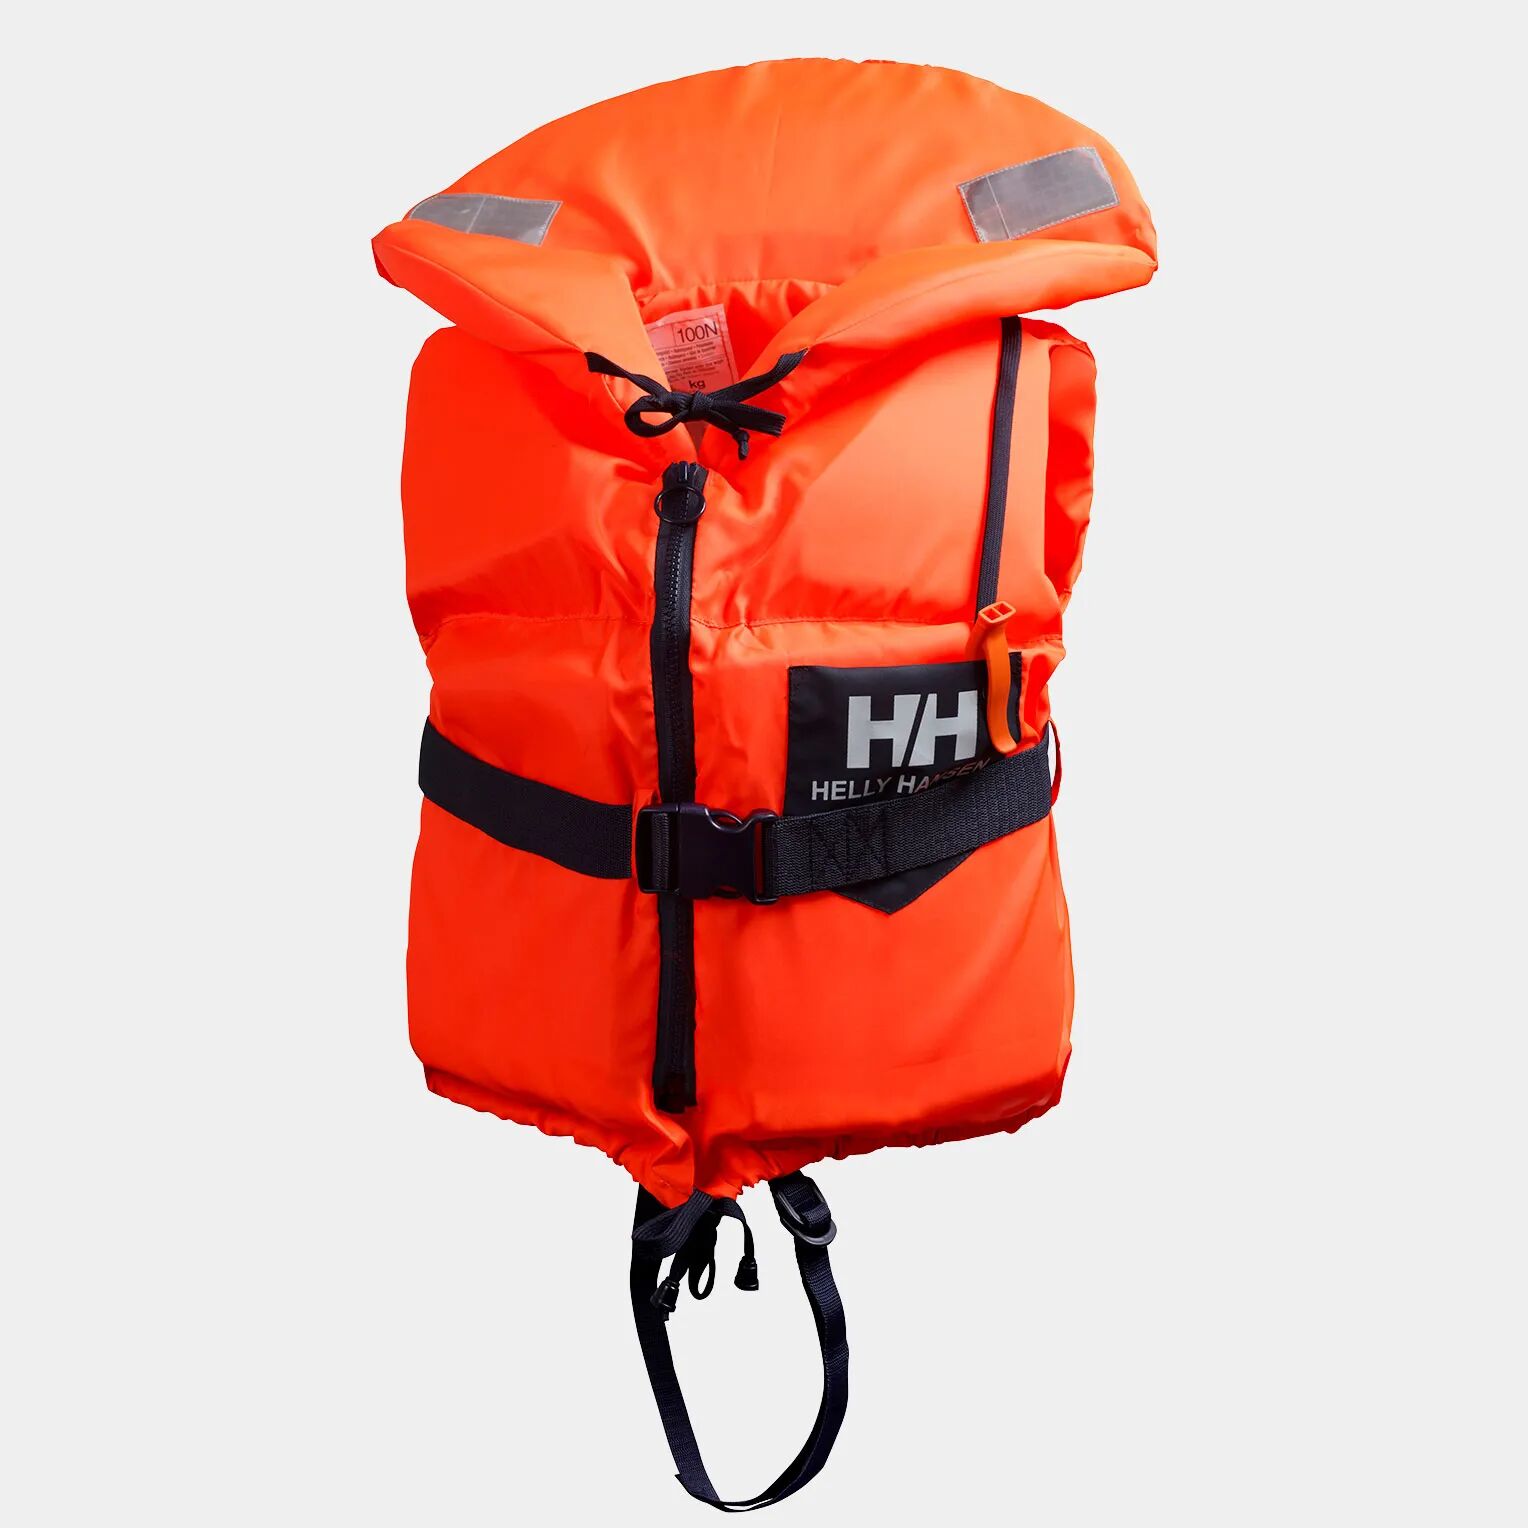 Helly Hansen Unisex W Navigare Scan Sailing Life Jacket Orange 30/40KG - Fluor Orang Orange - Unisex